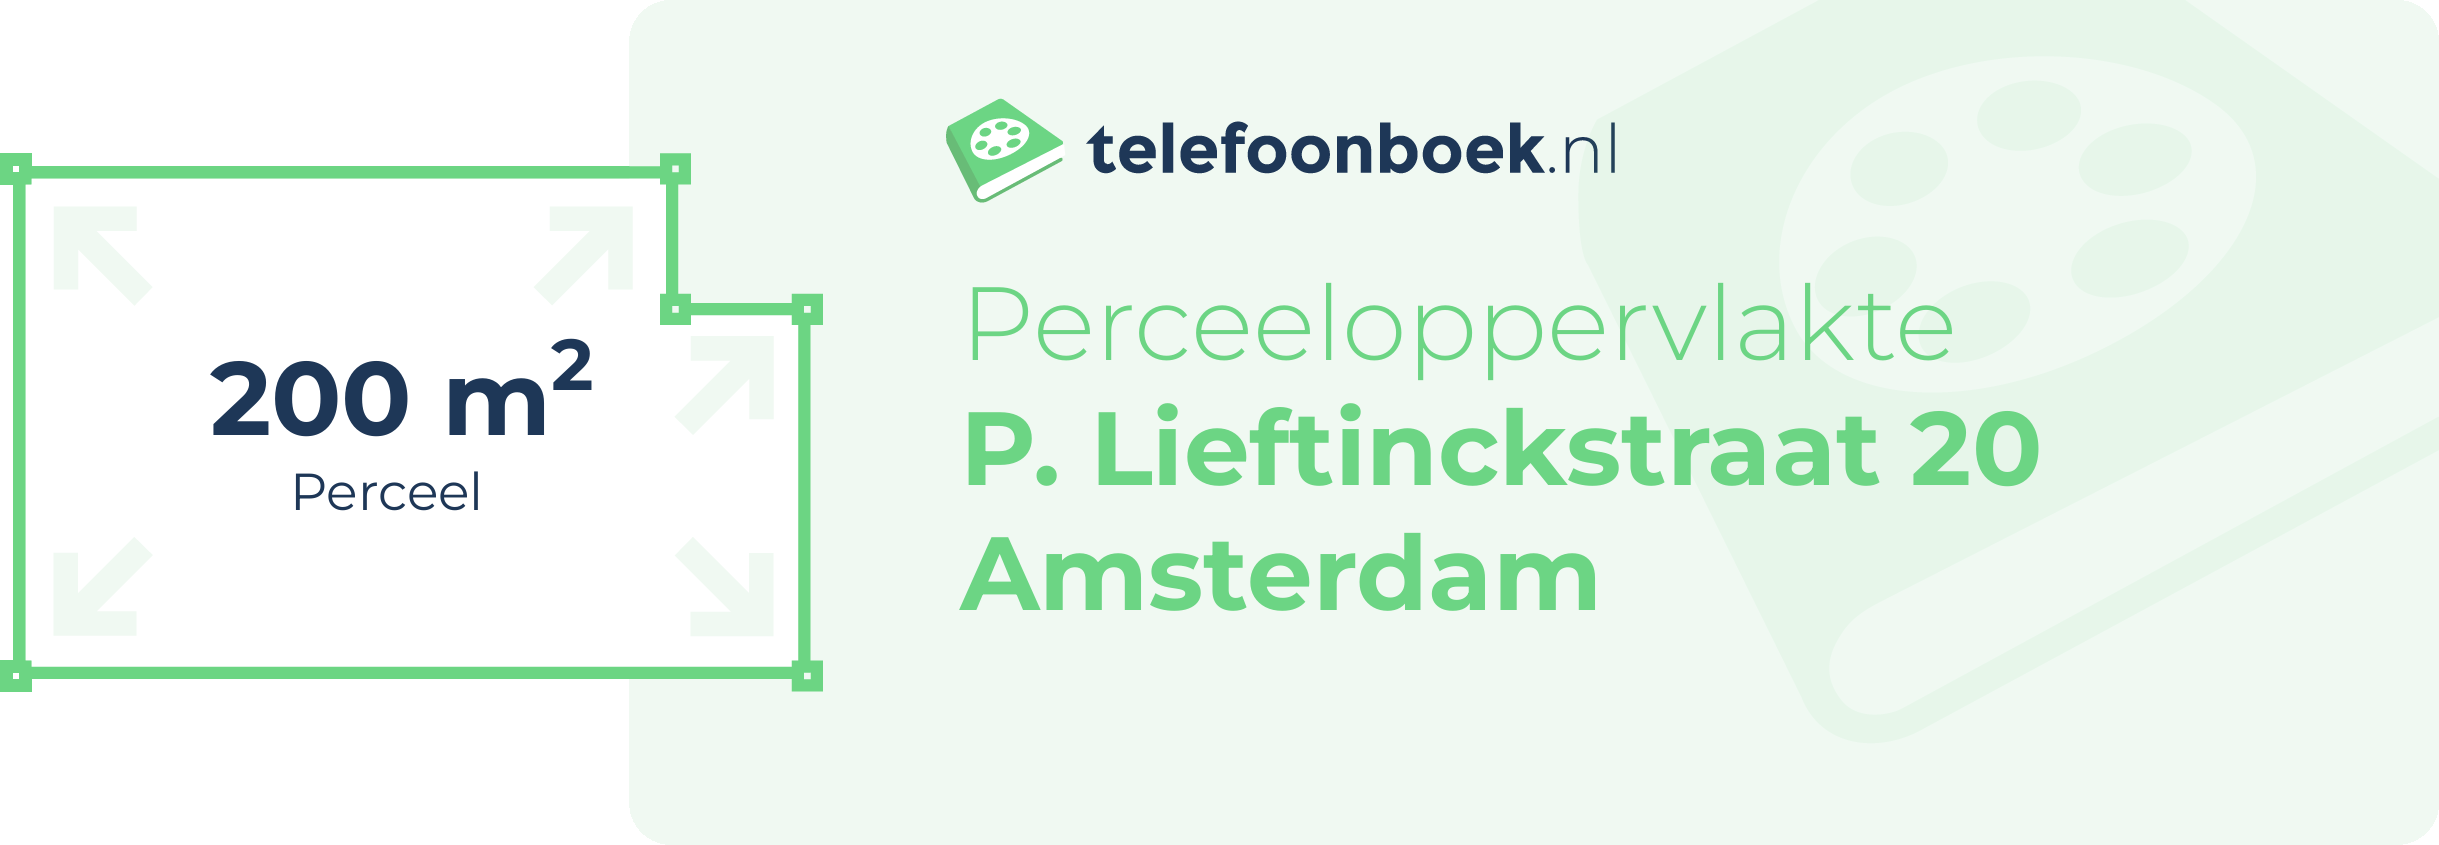 Perceeloppervlakte P. Lieftinckstraat 20 Amsterdam